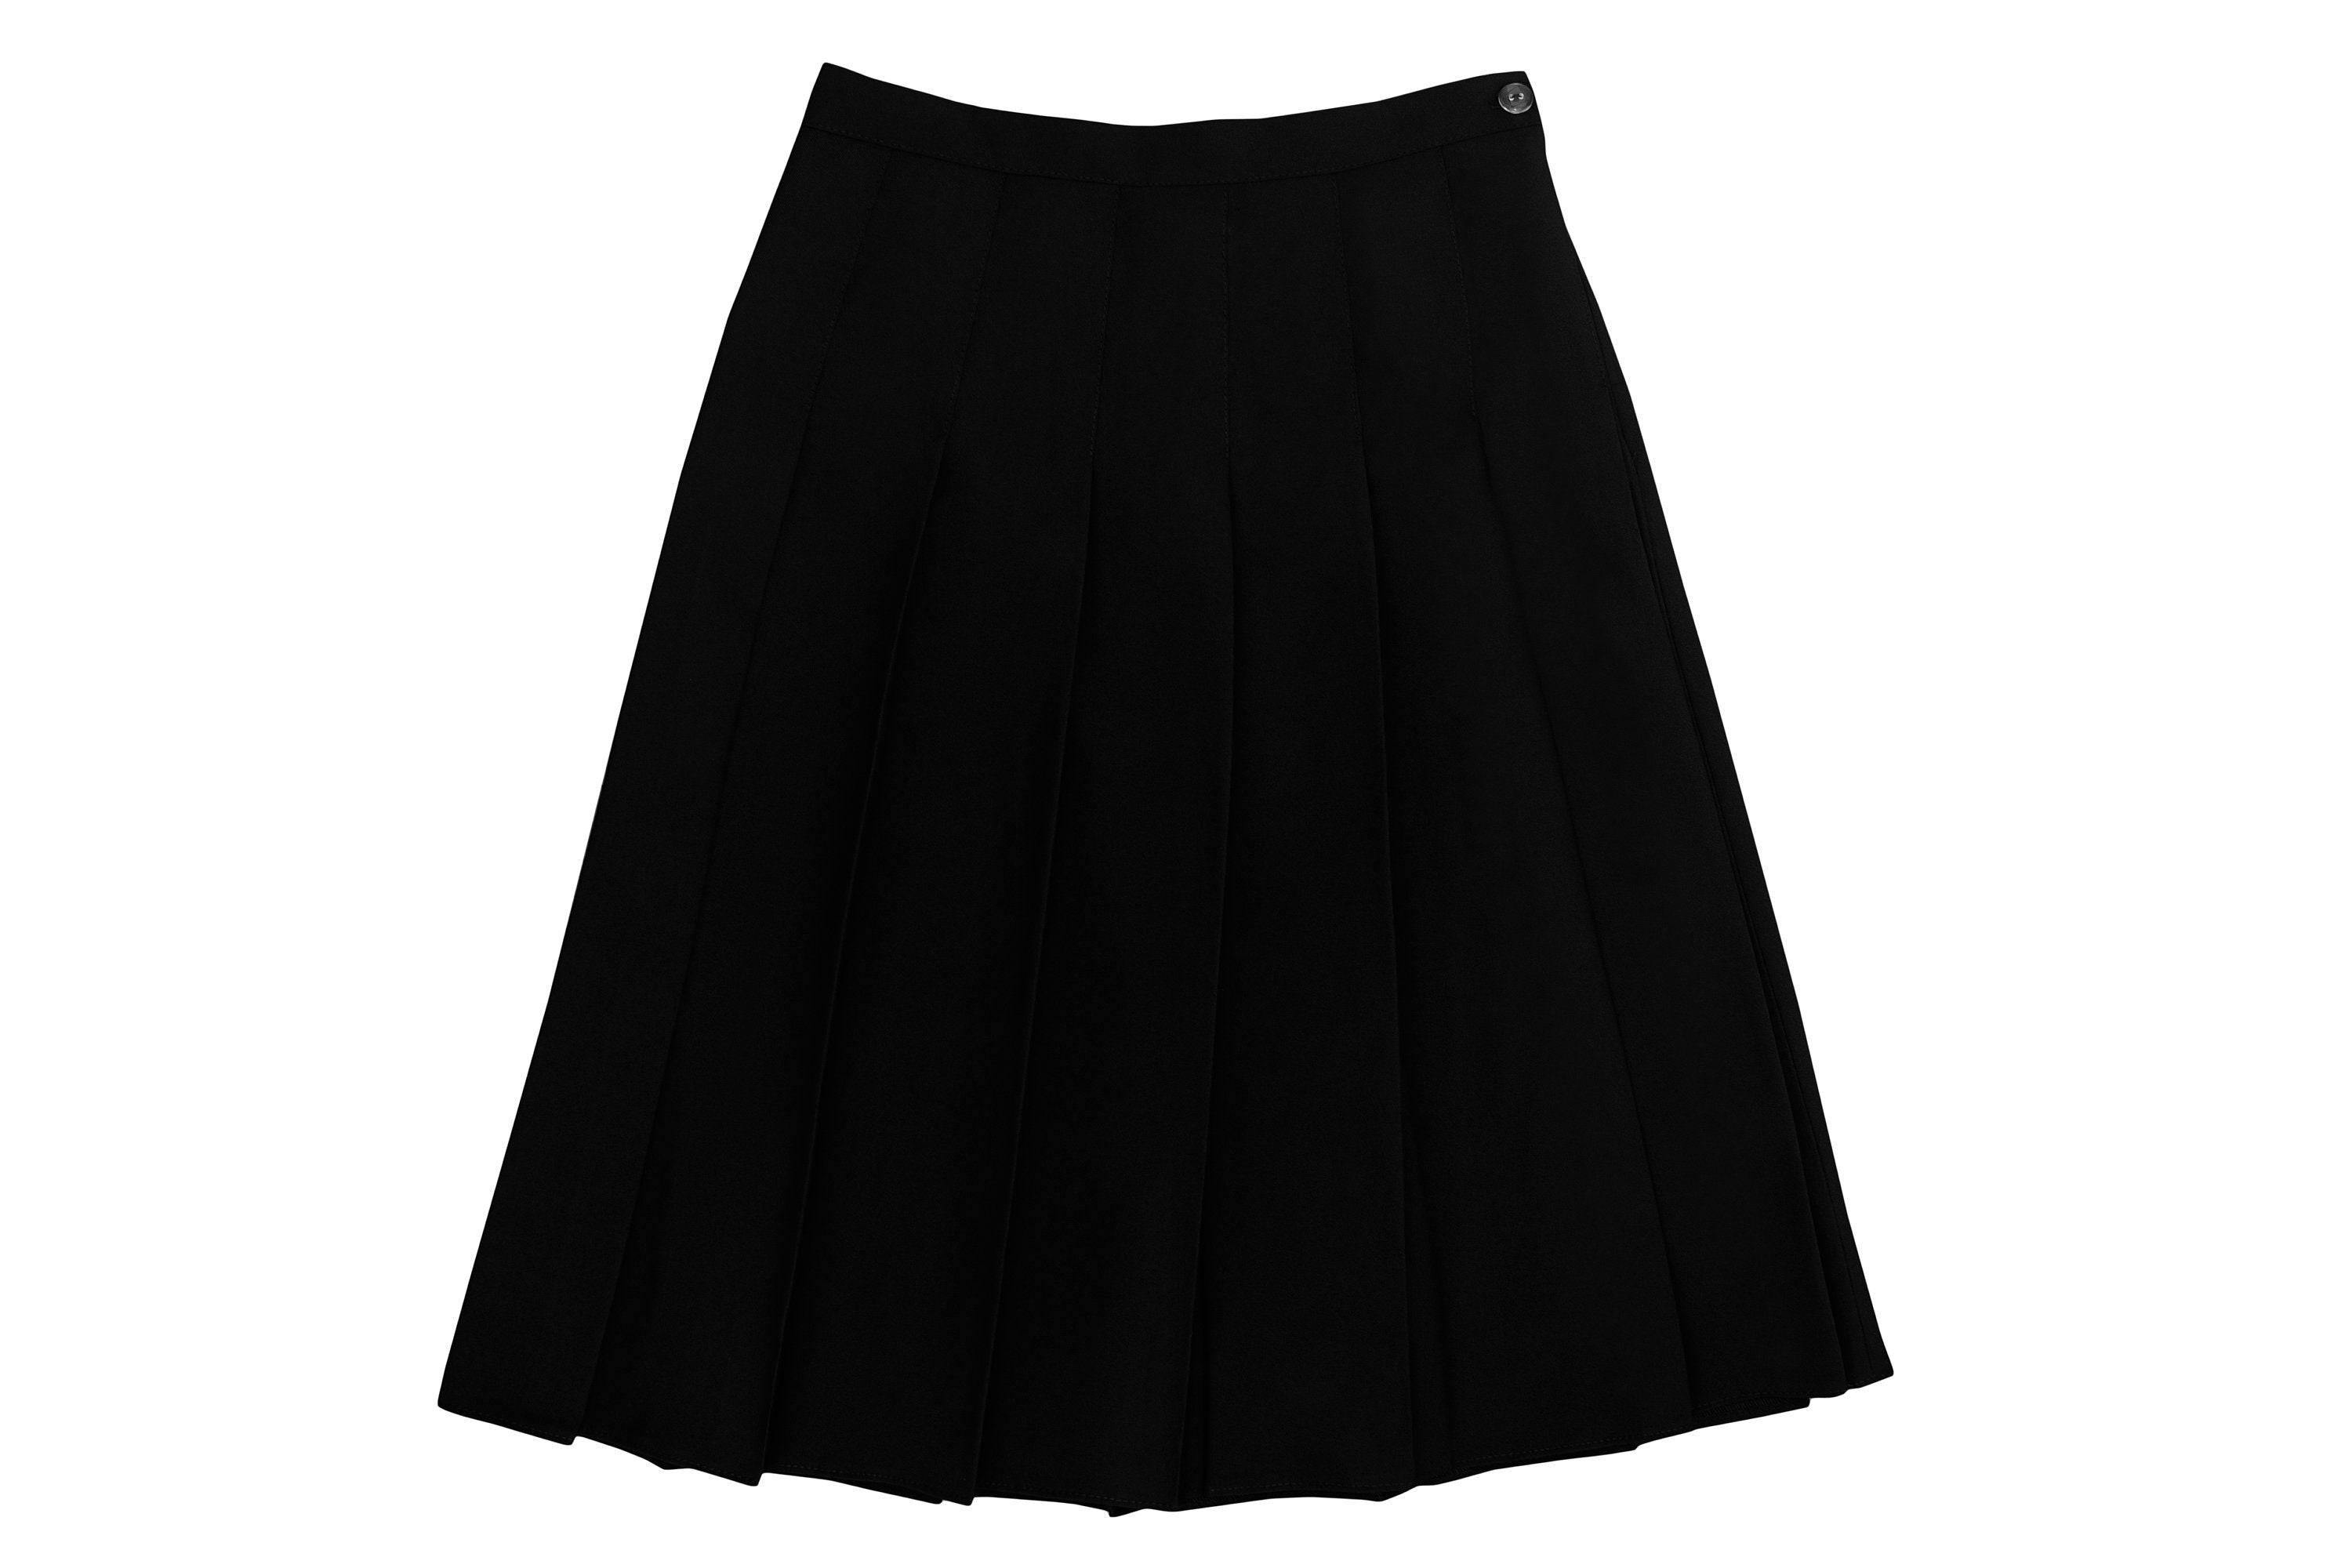 tennis skirt black knee length midi pleated skirt american | Etsy